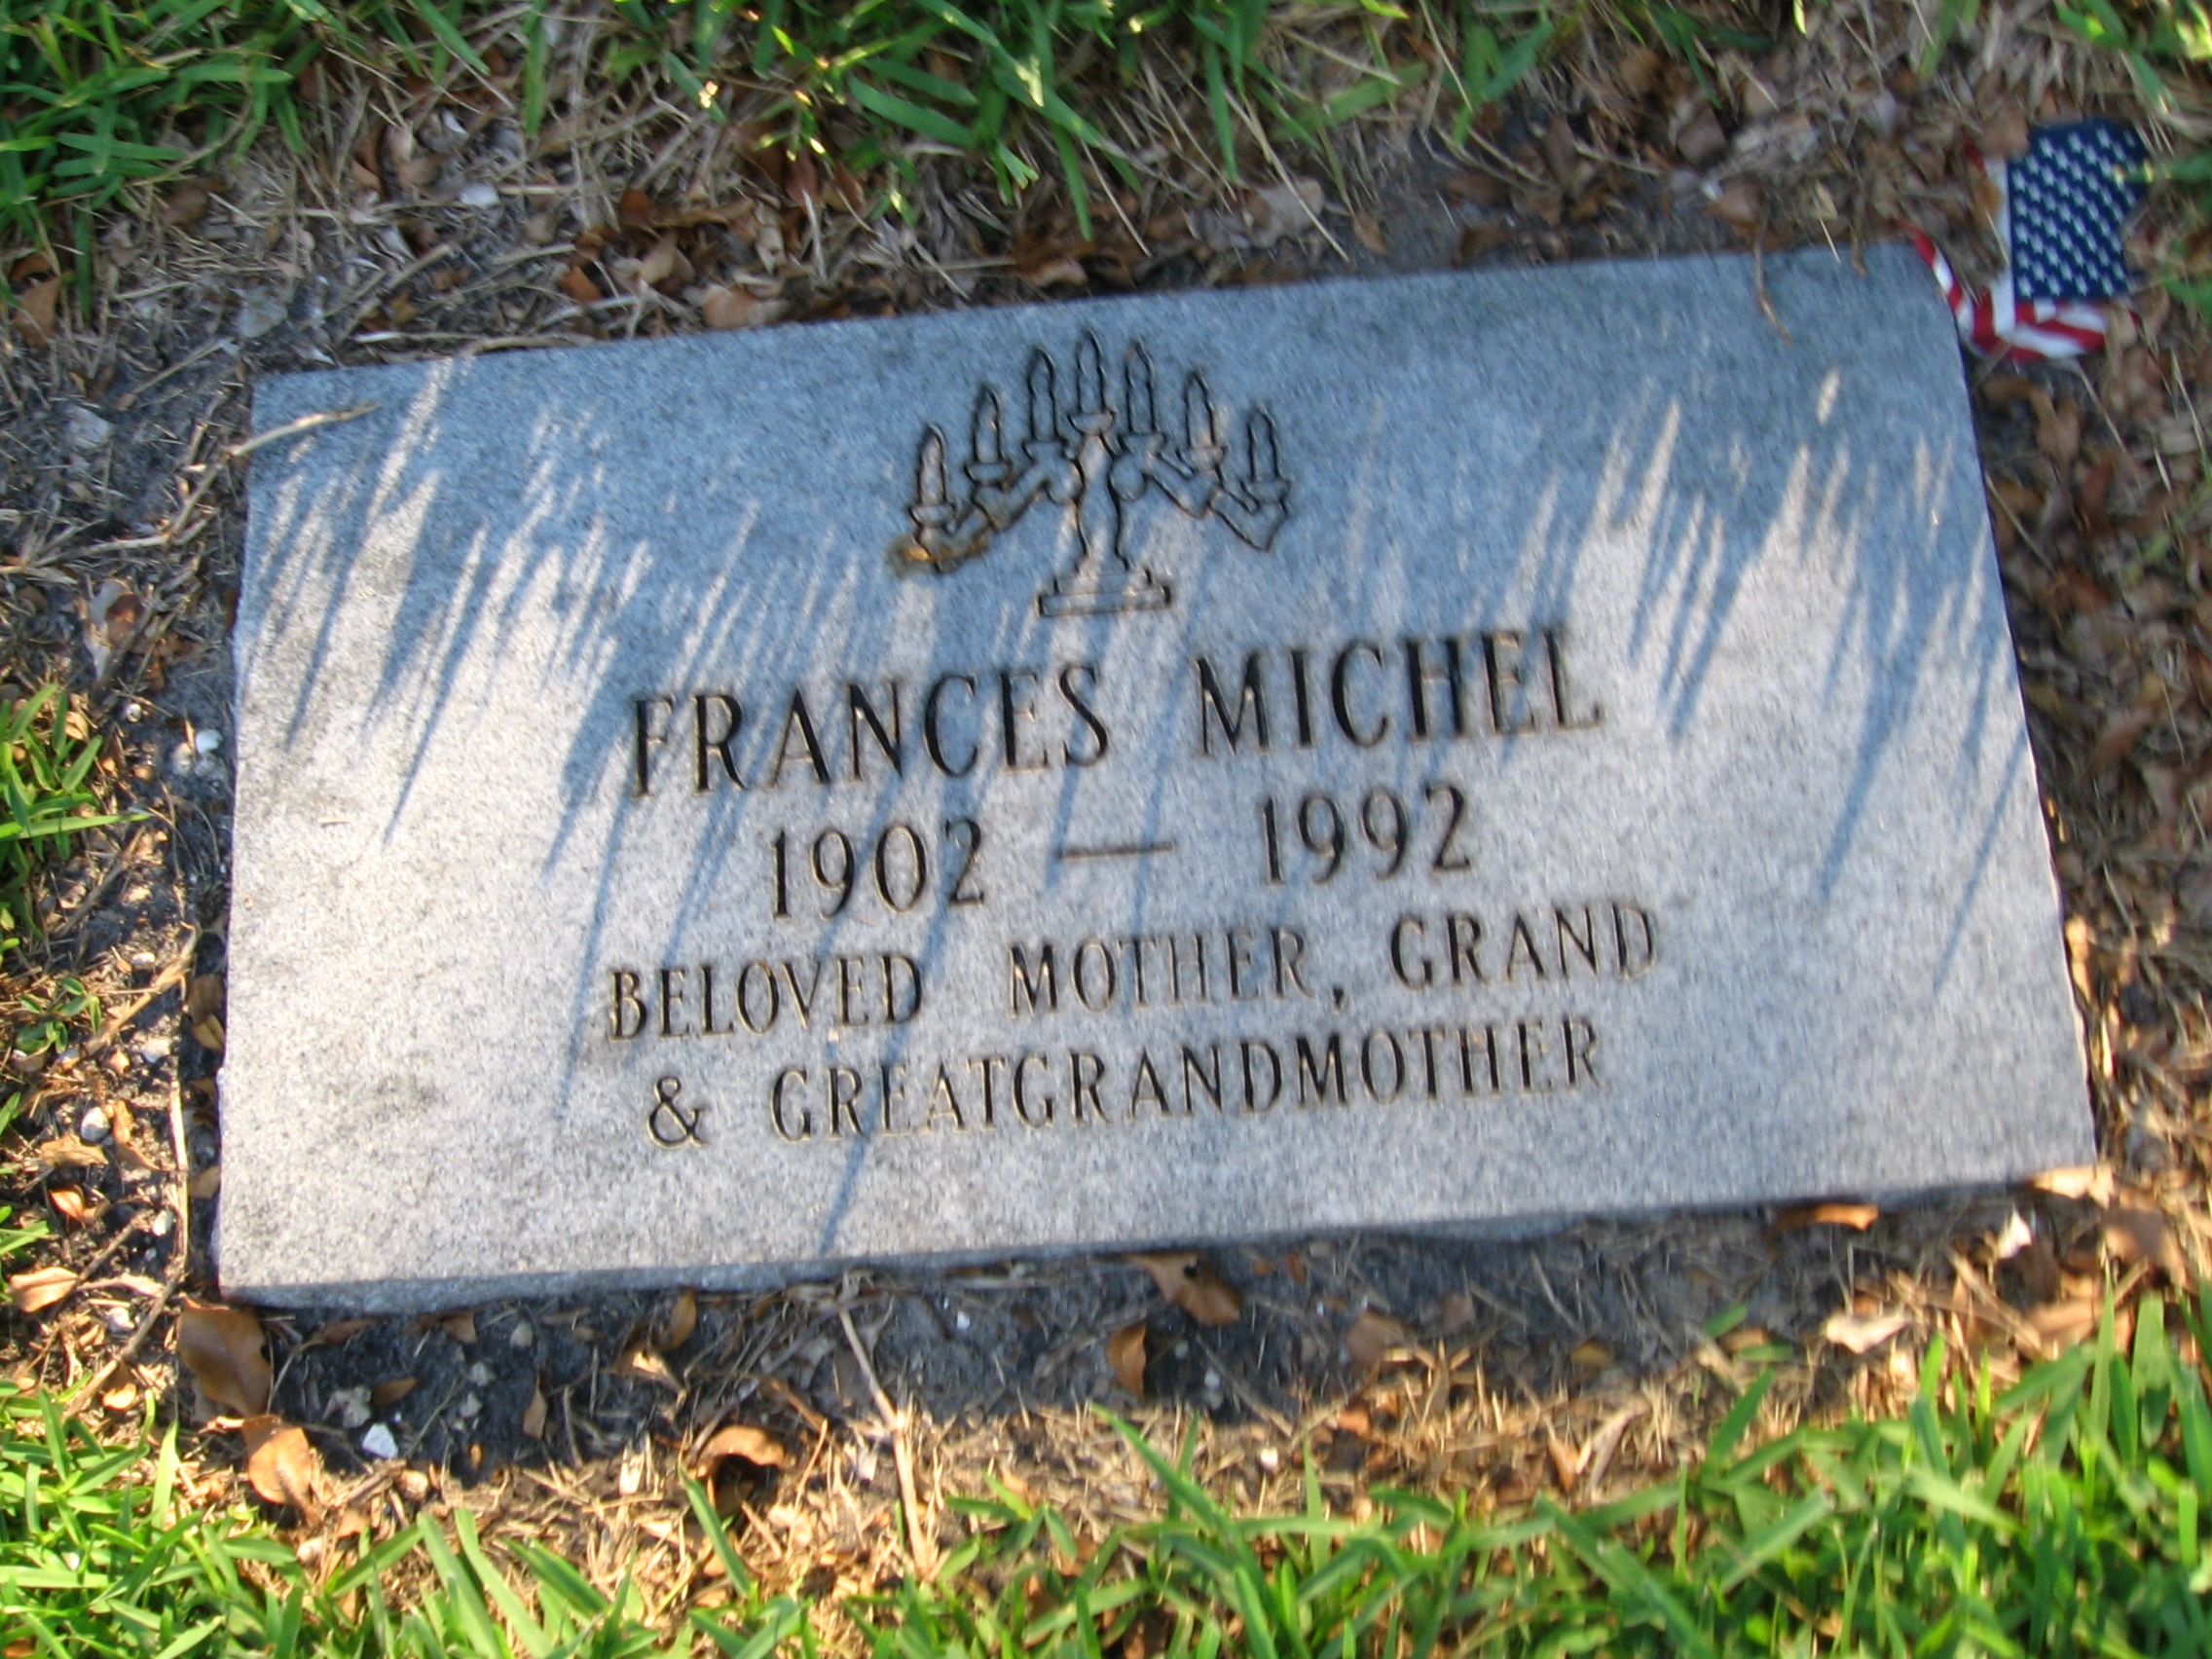 Frances Michel